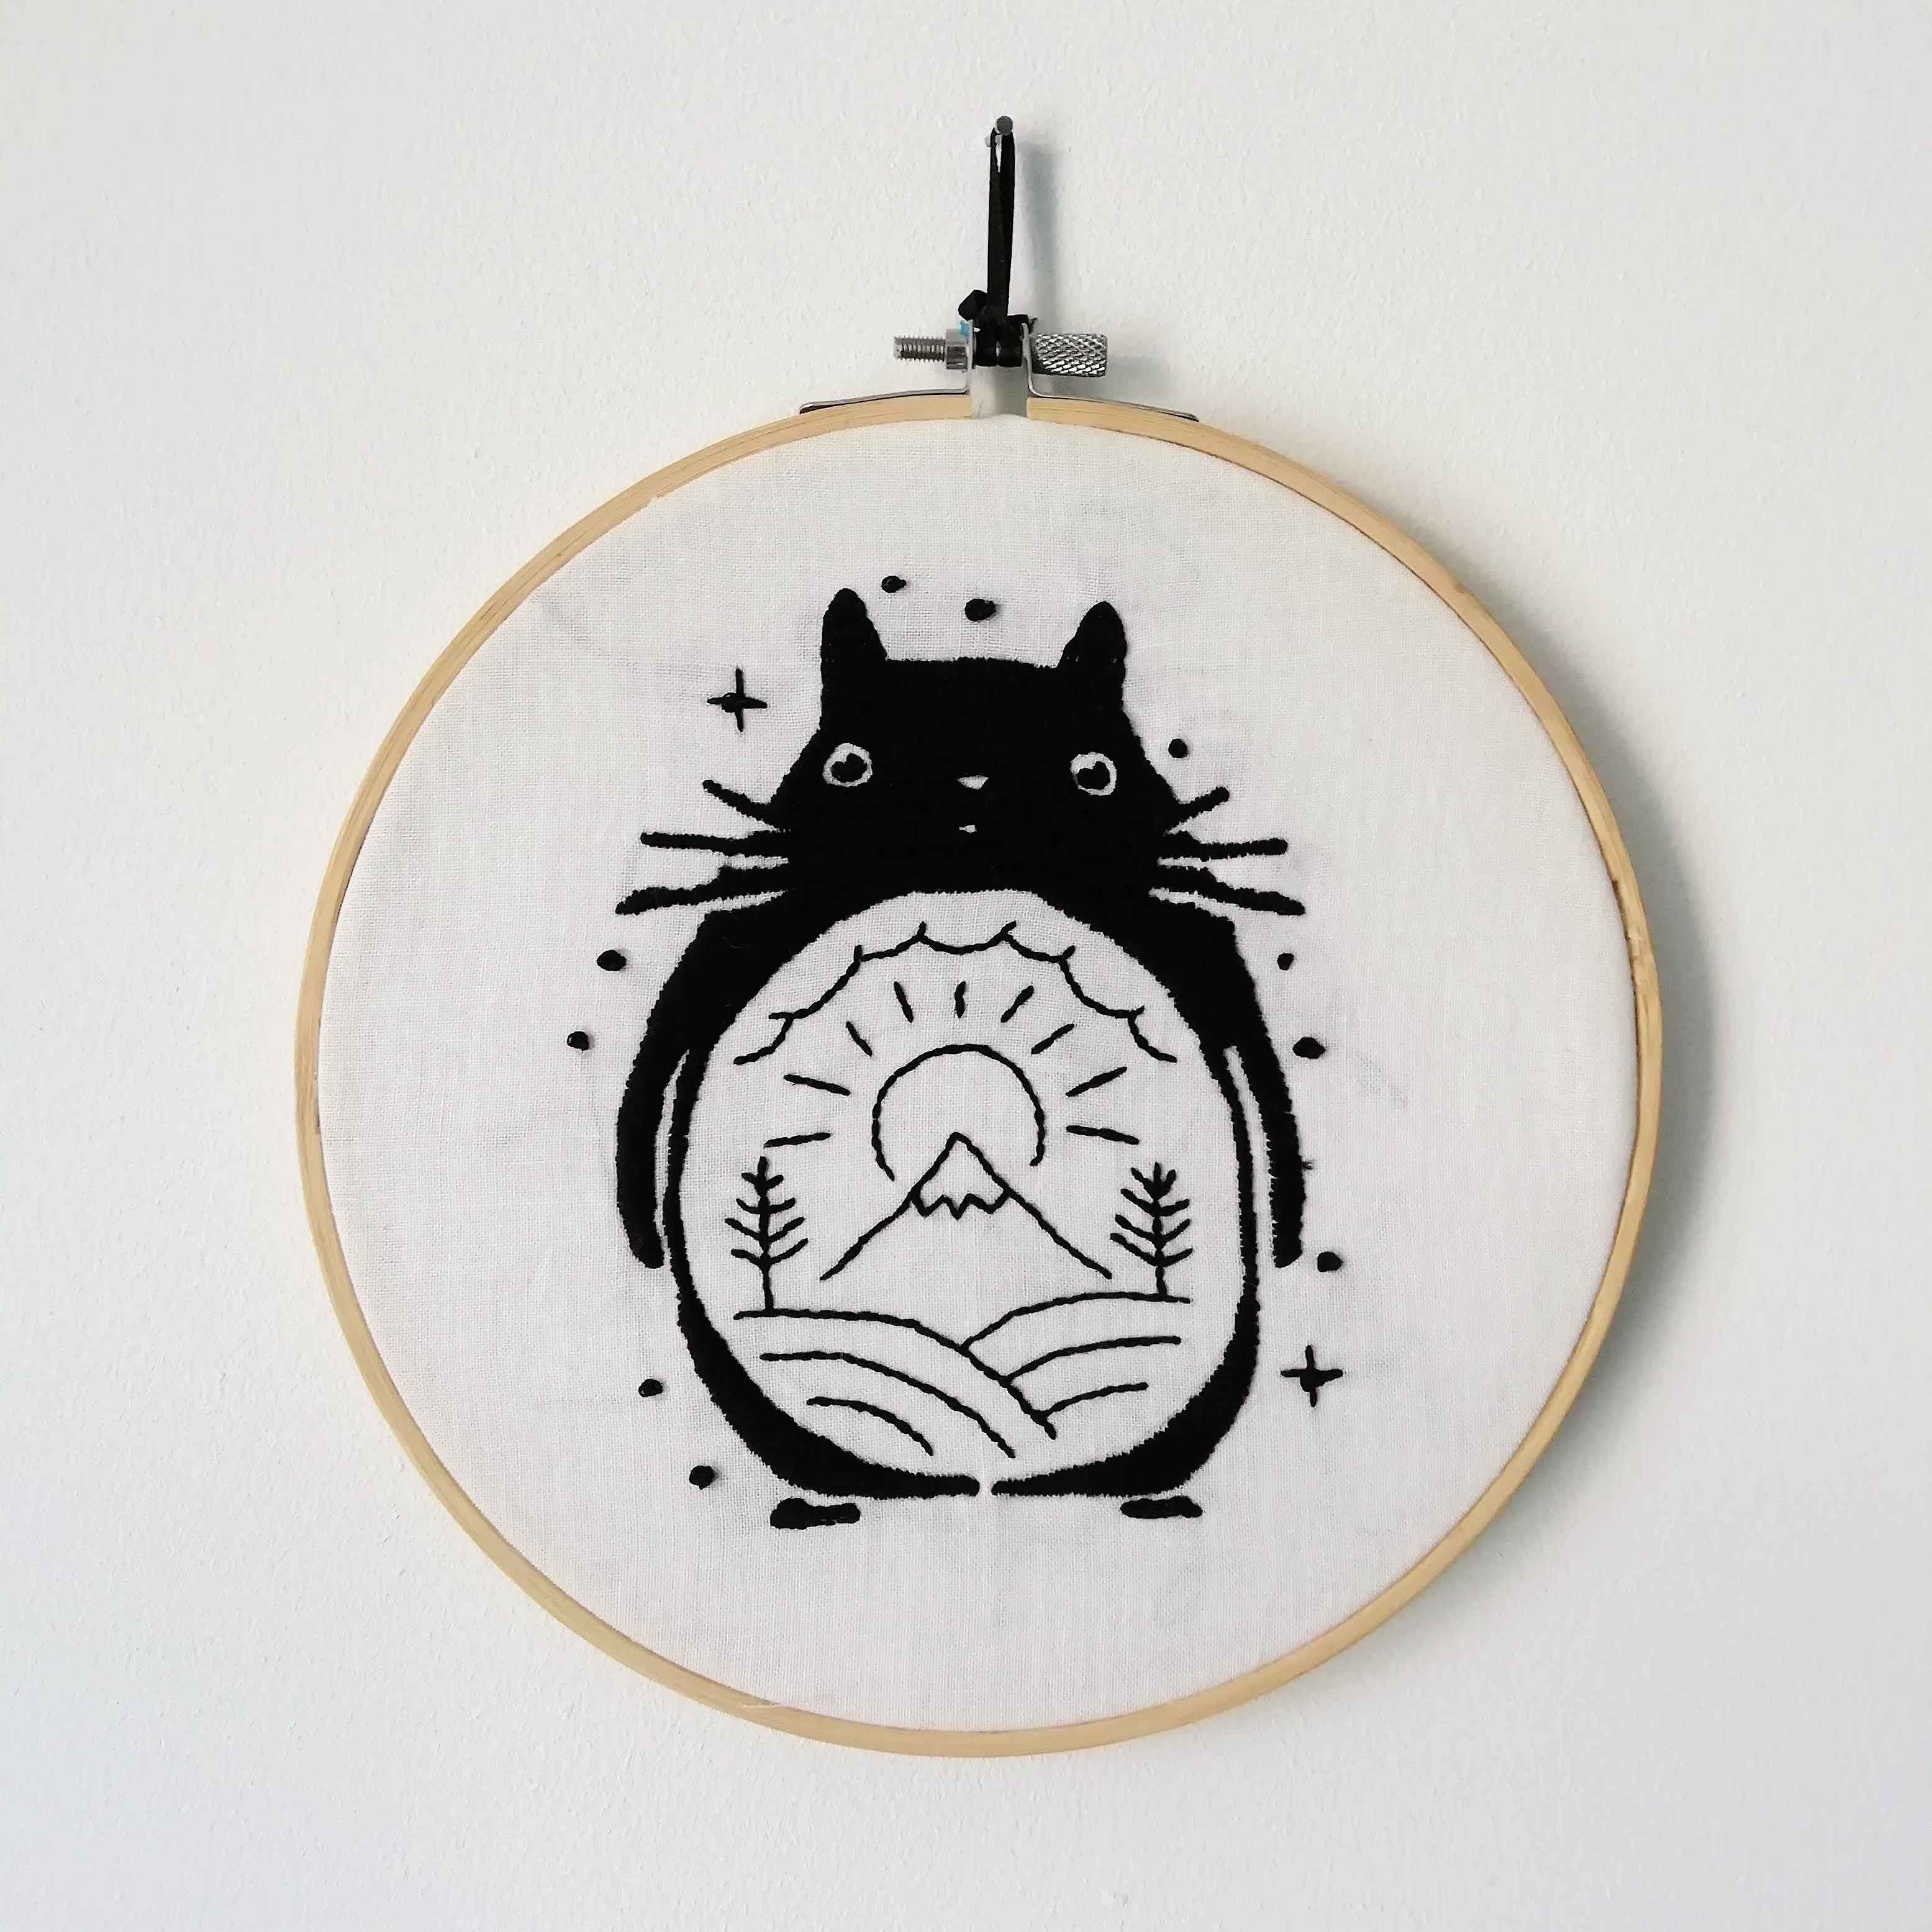 Totoro Embroidery Pattern Studio Ghibli Embroidery